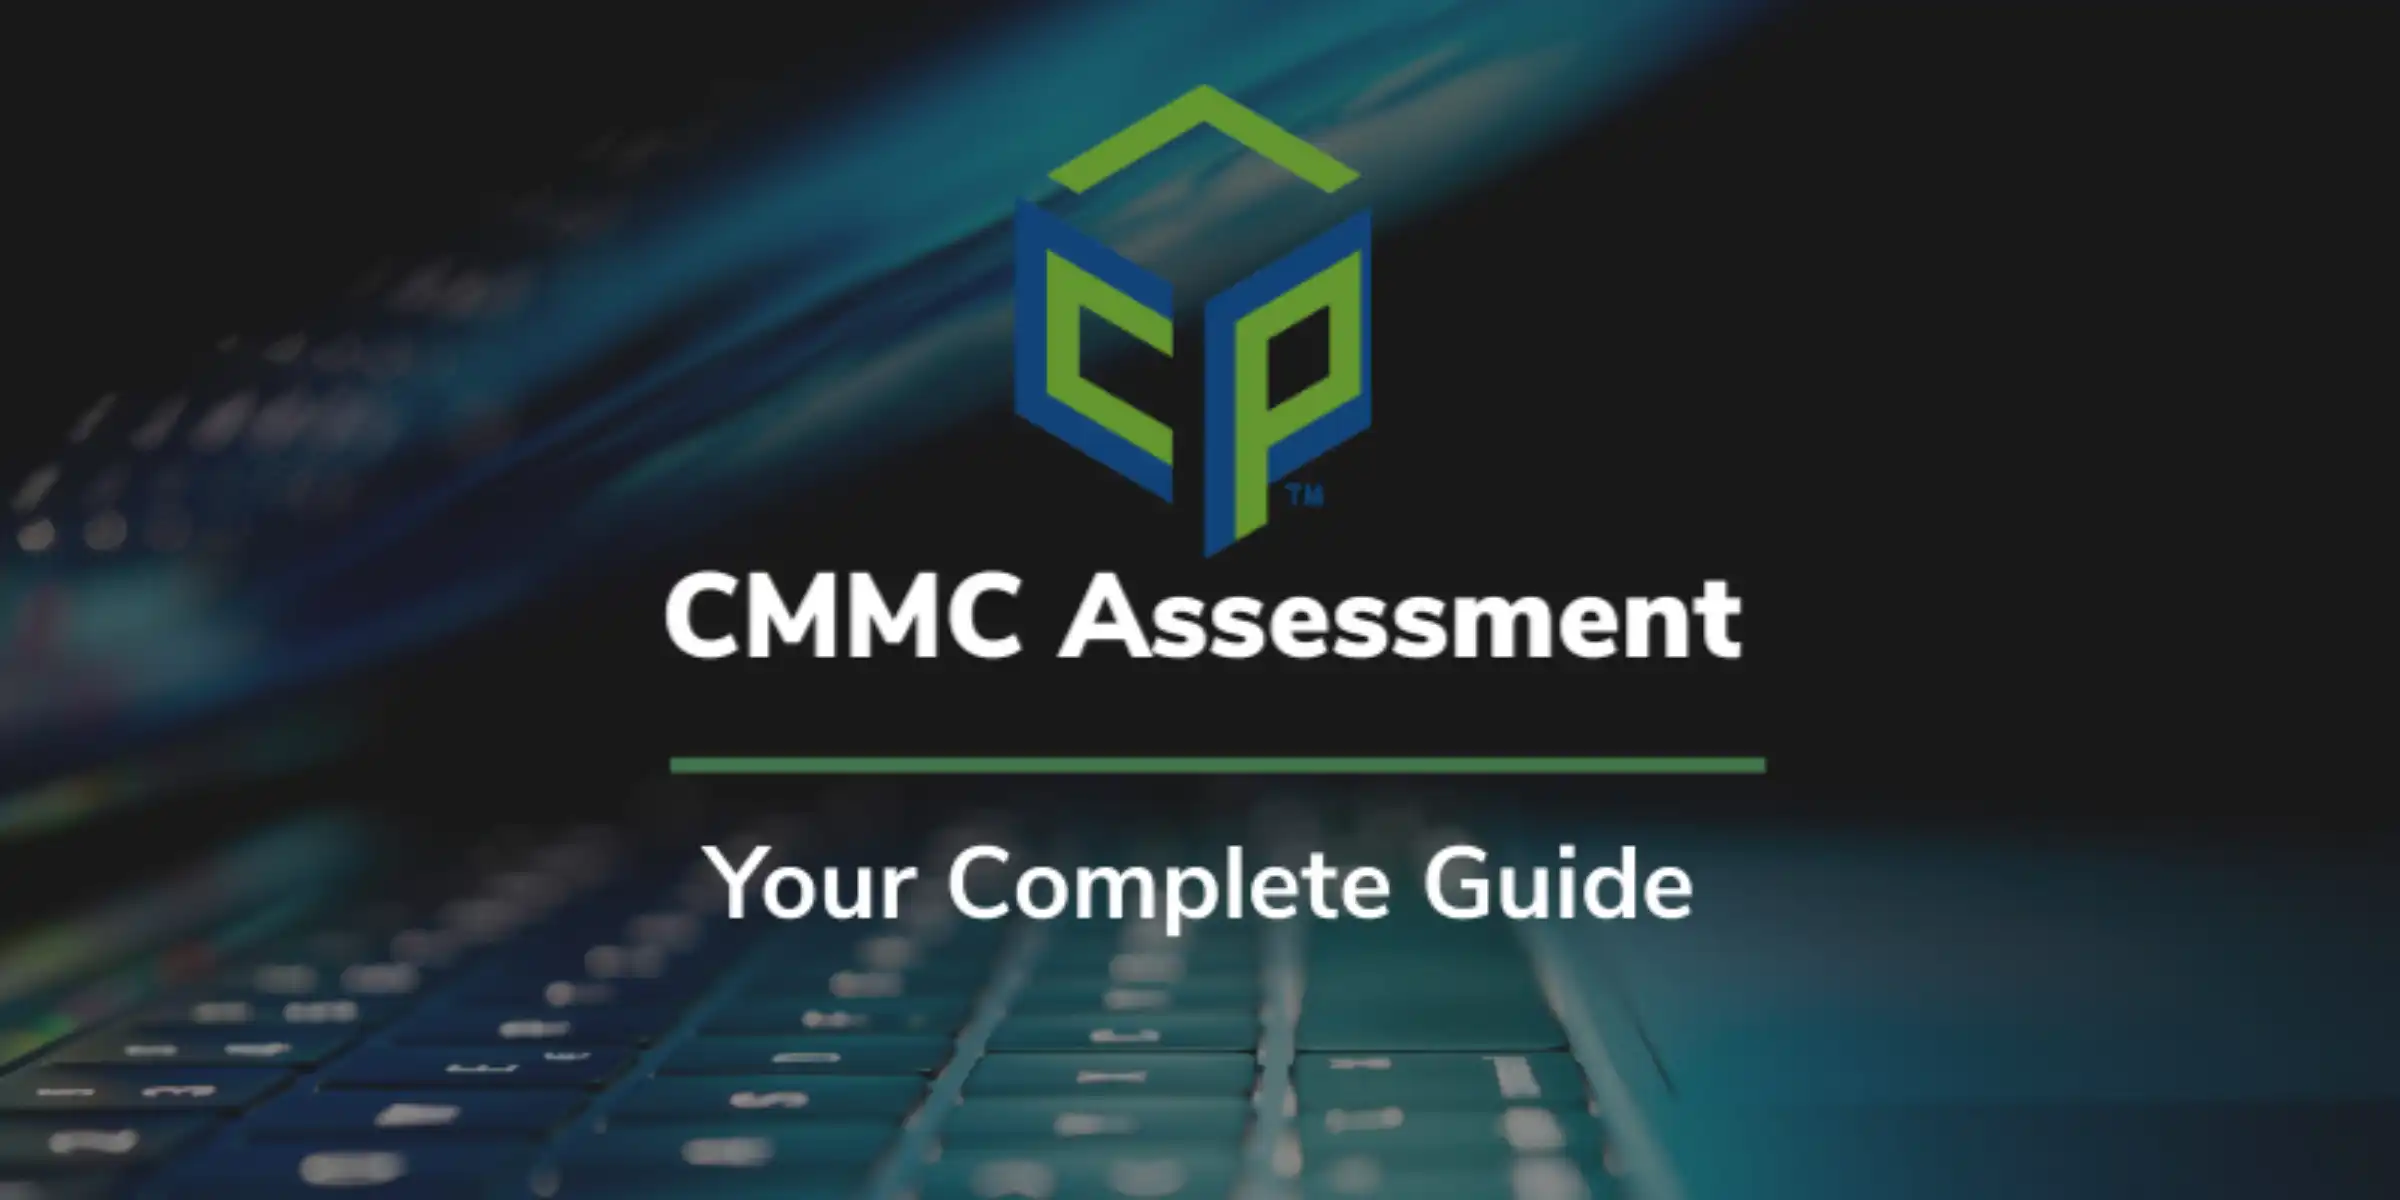 CMMC Assessment Guide